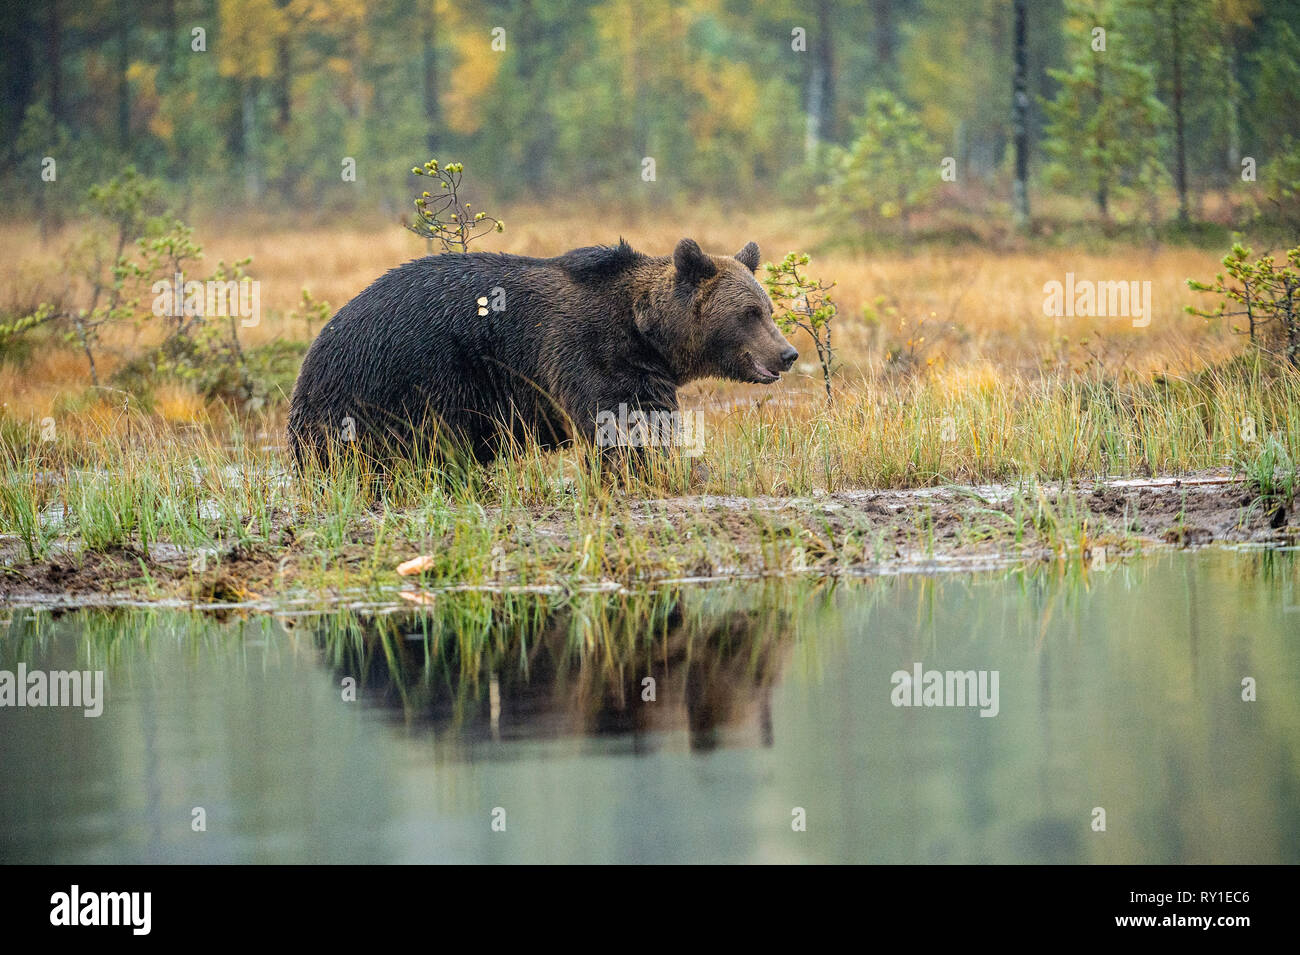 A brown bear  on the bog. Adult Wild Big Brown Bear . Scientific name: Ursus arctos. Natural habitat, autumn season. Stock Photo